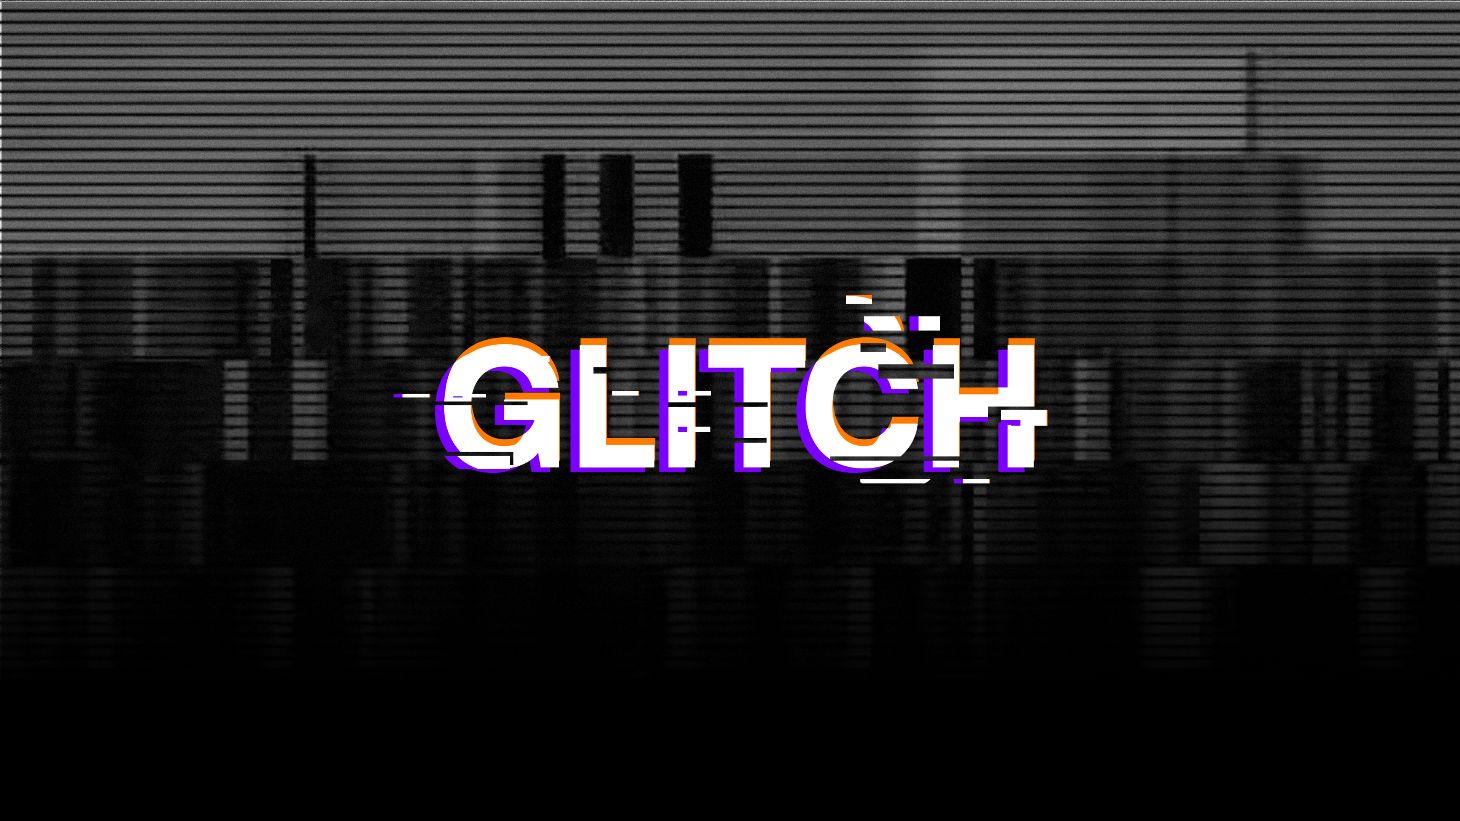 How to create a glitch effect in Premiere Pro